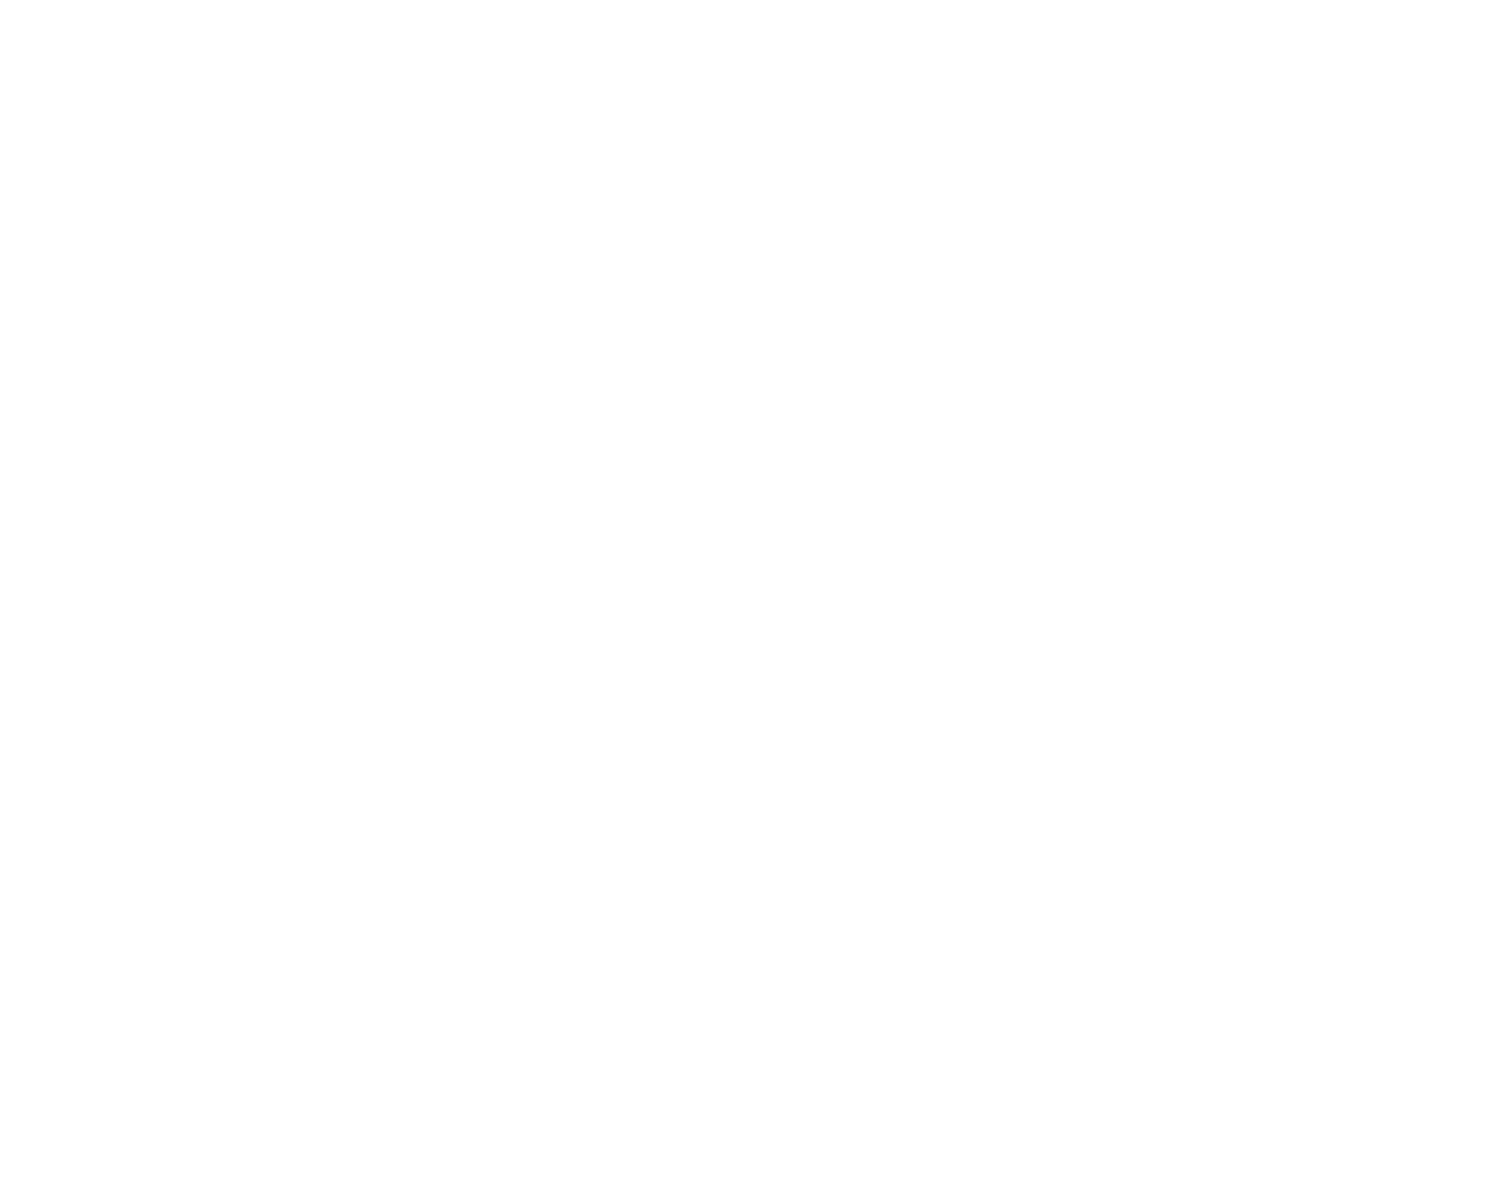 Port of Tauranga logo for dark backgrounds (transparent PNG)